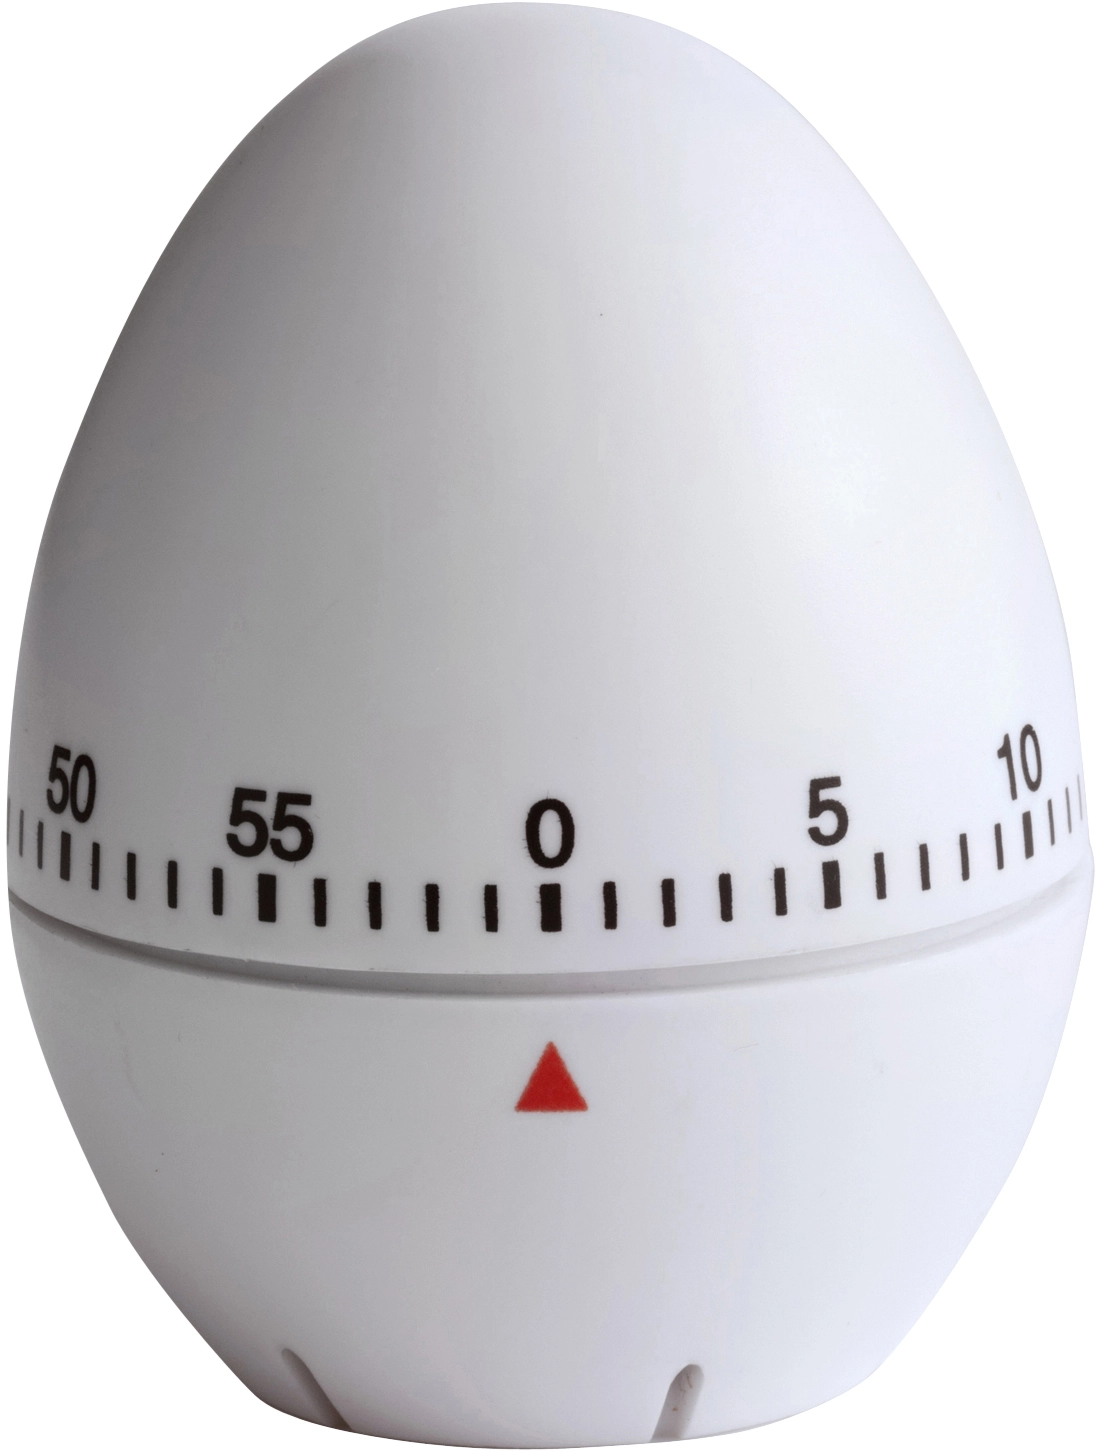 Minutnik kuchenny jajko V5234-02 biały